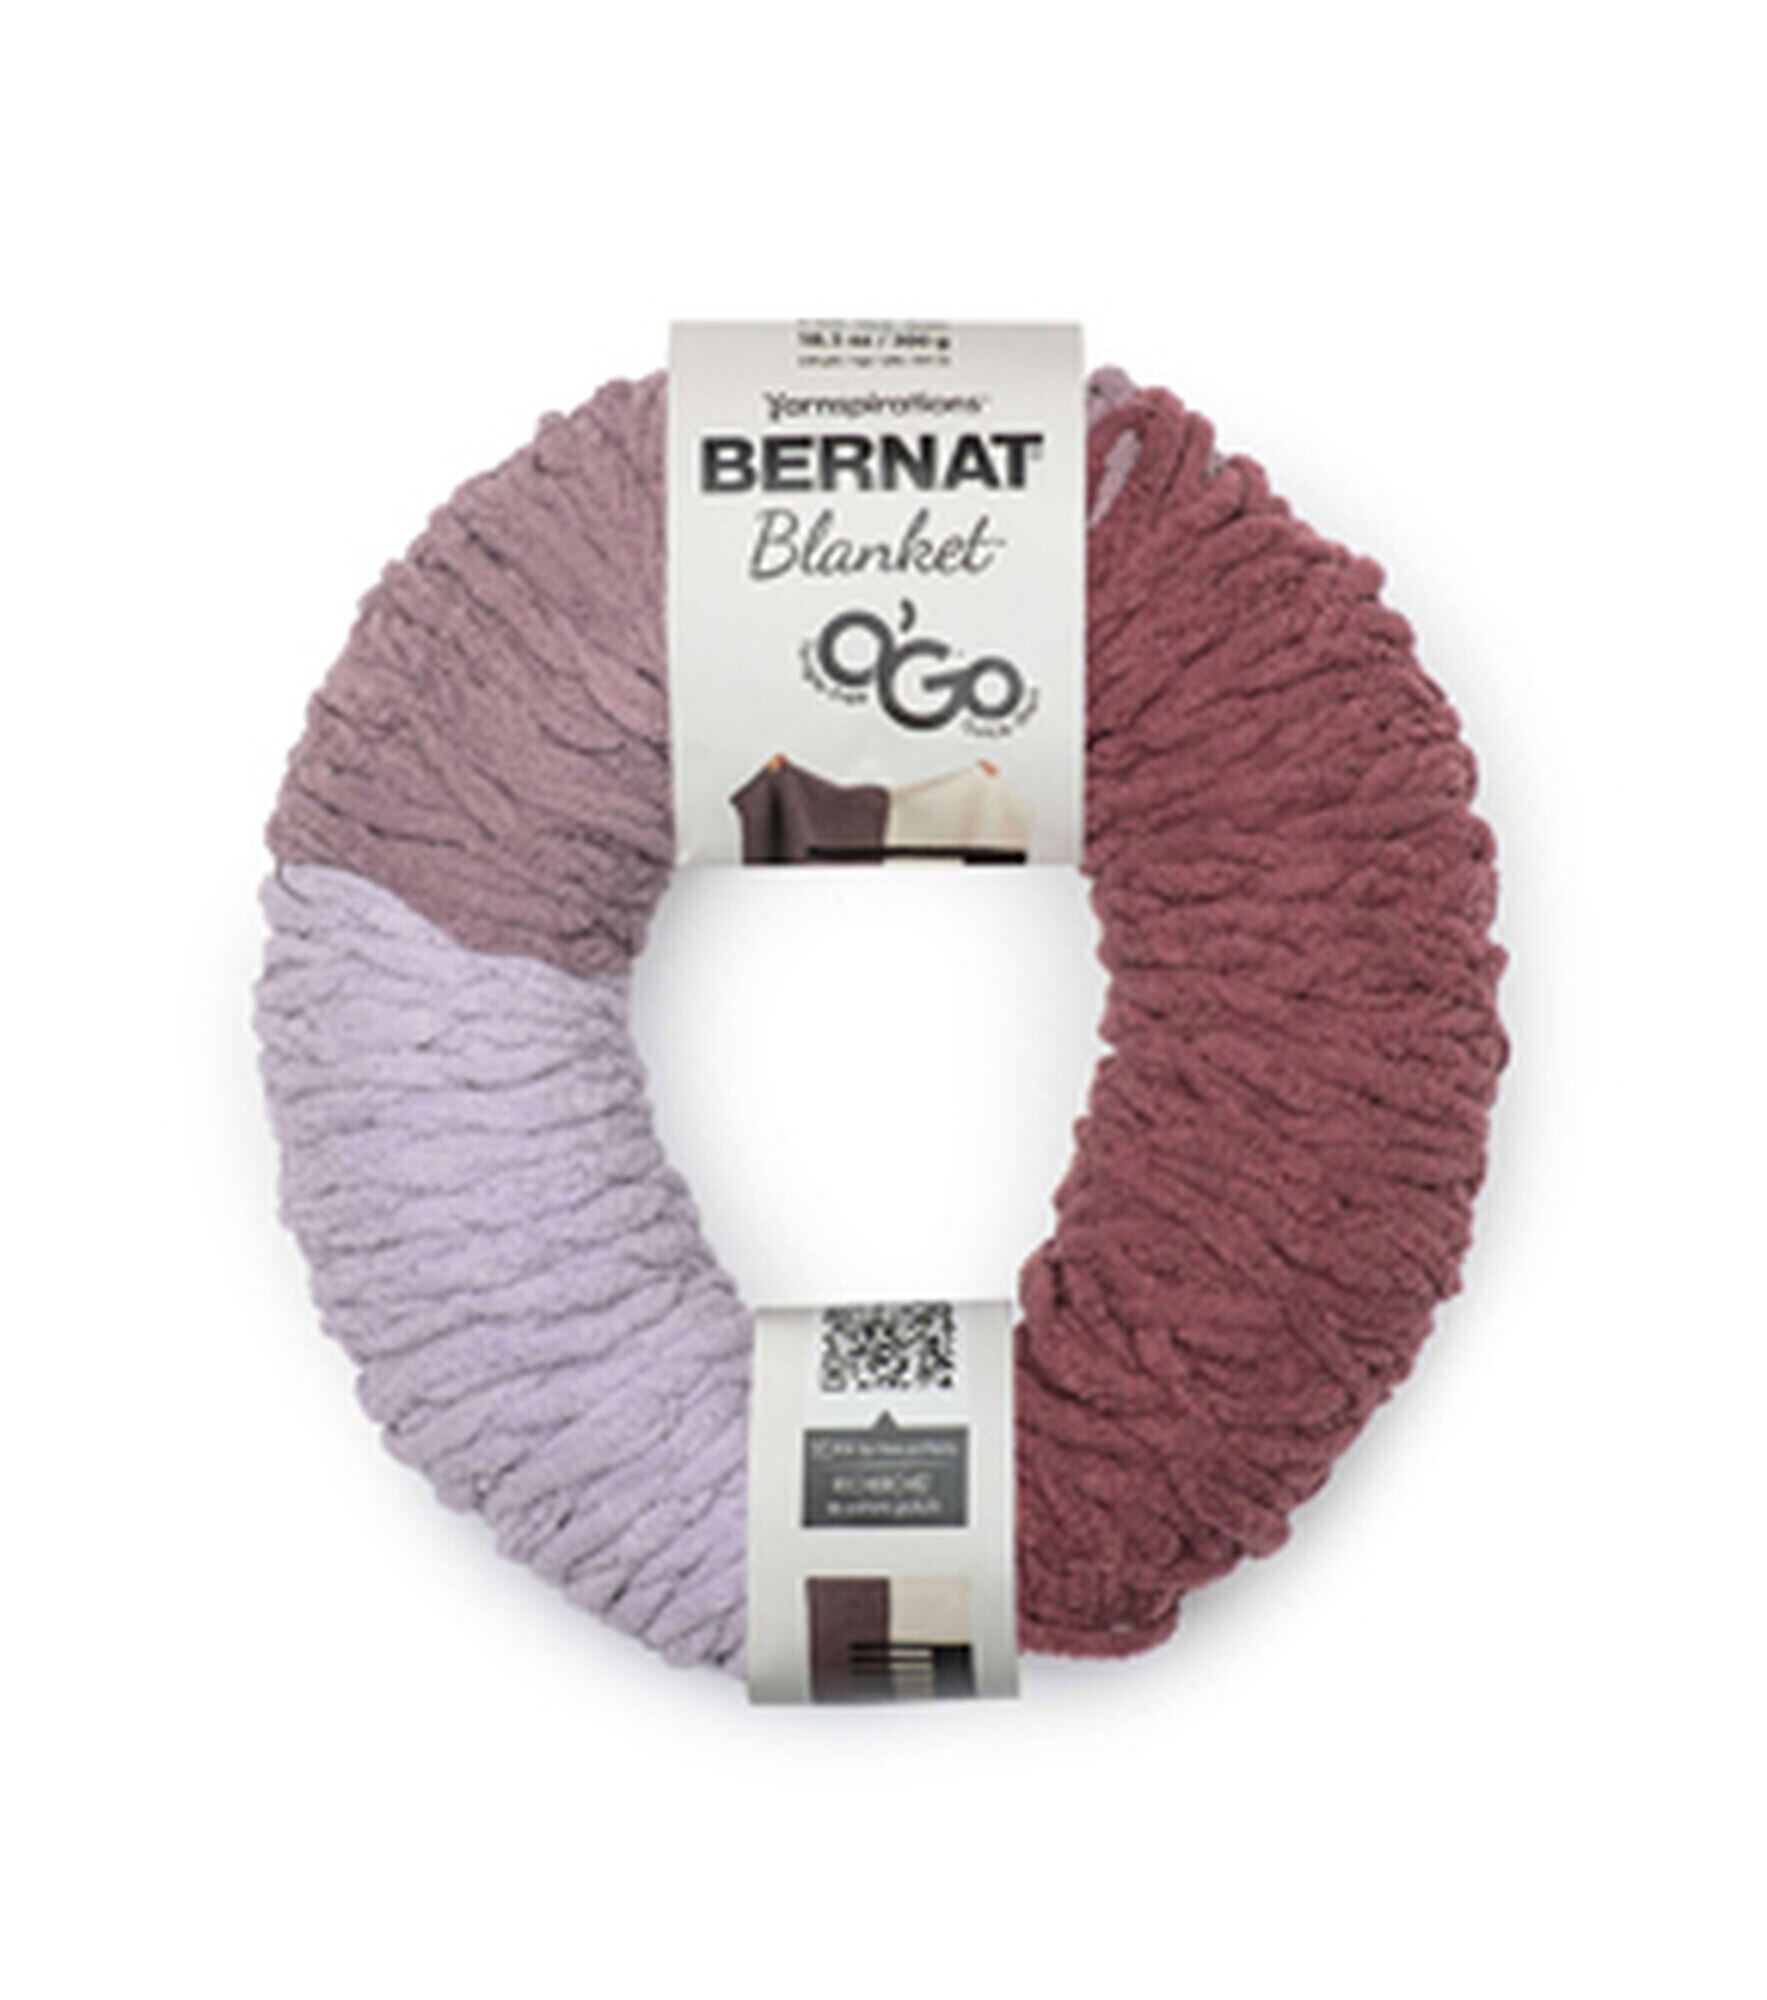 Bernat Blanket O'Go Yarn - Clearance